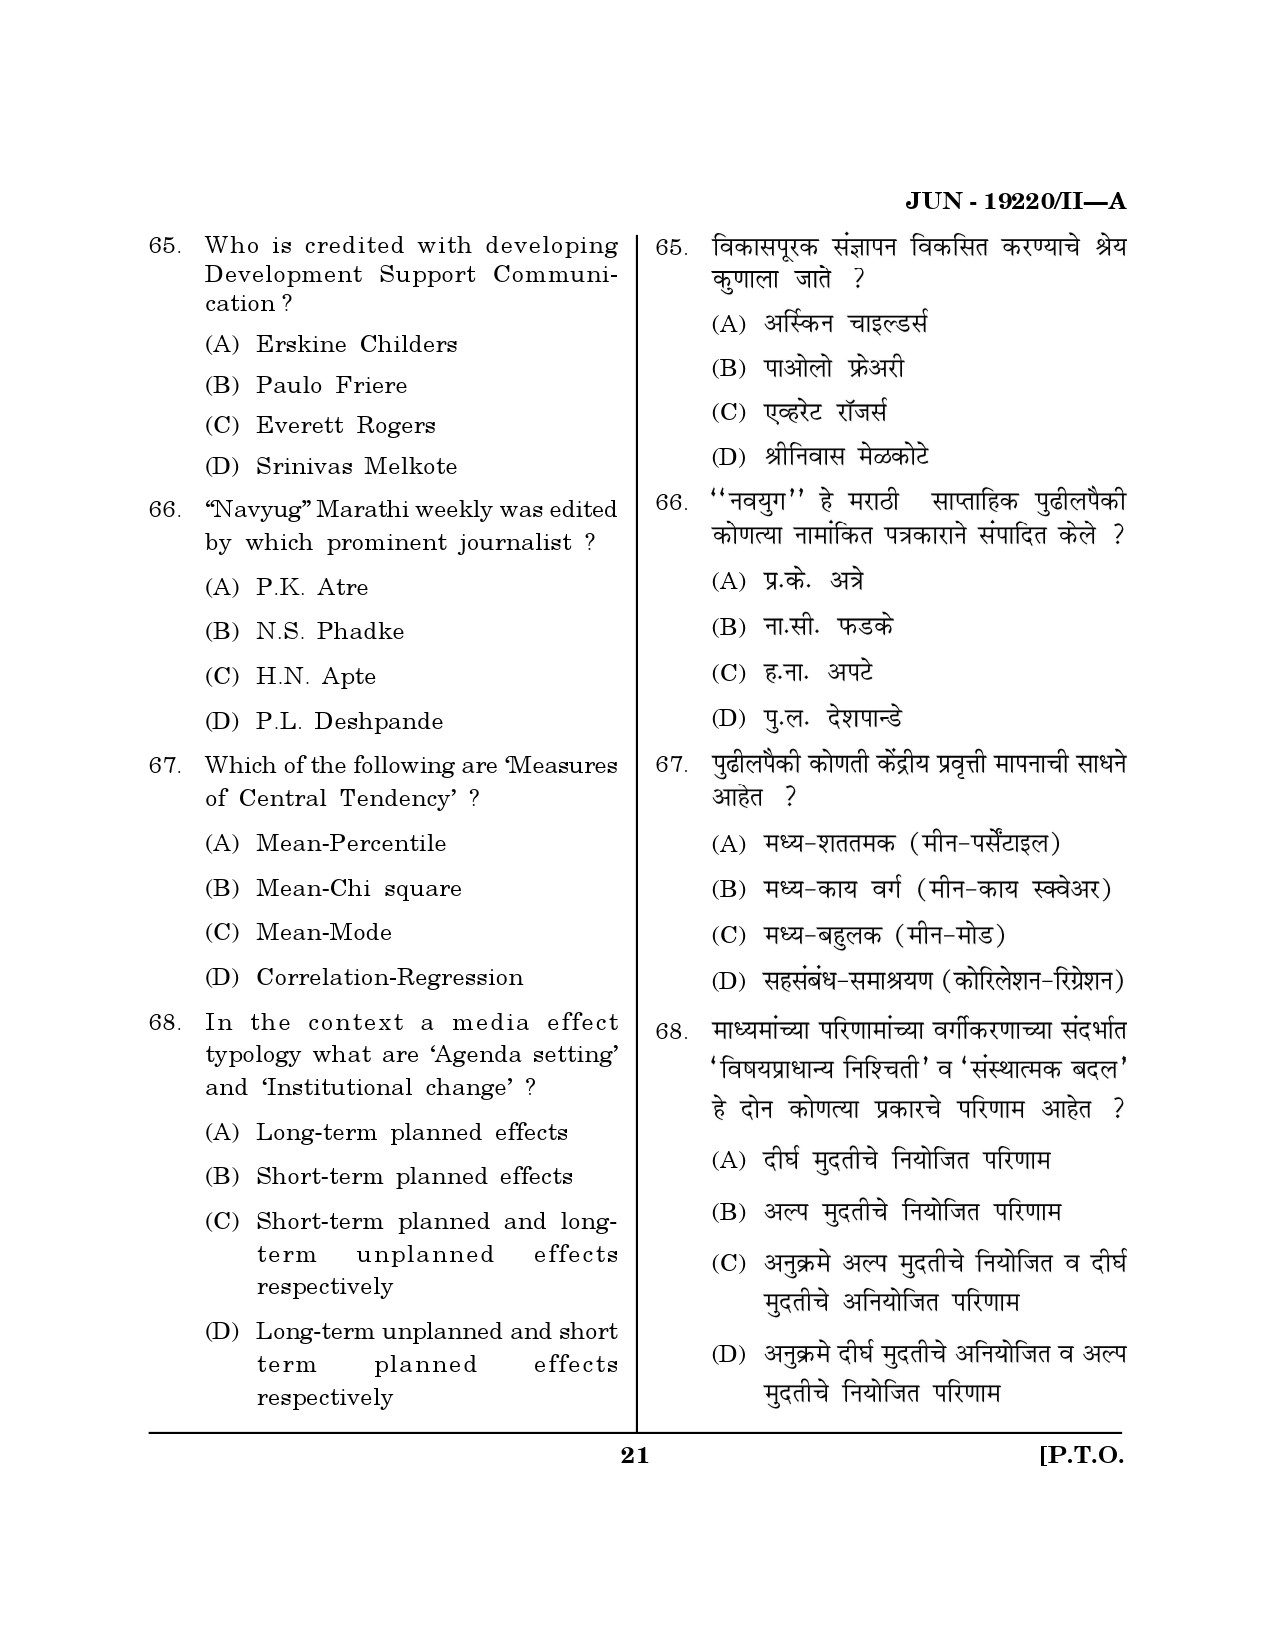 Maharashtra SET Journalism and Mass Communication Question Paper II June 2020 20